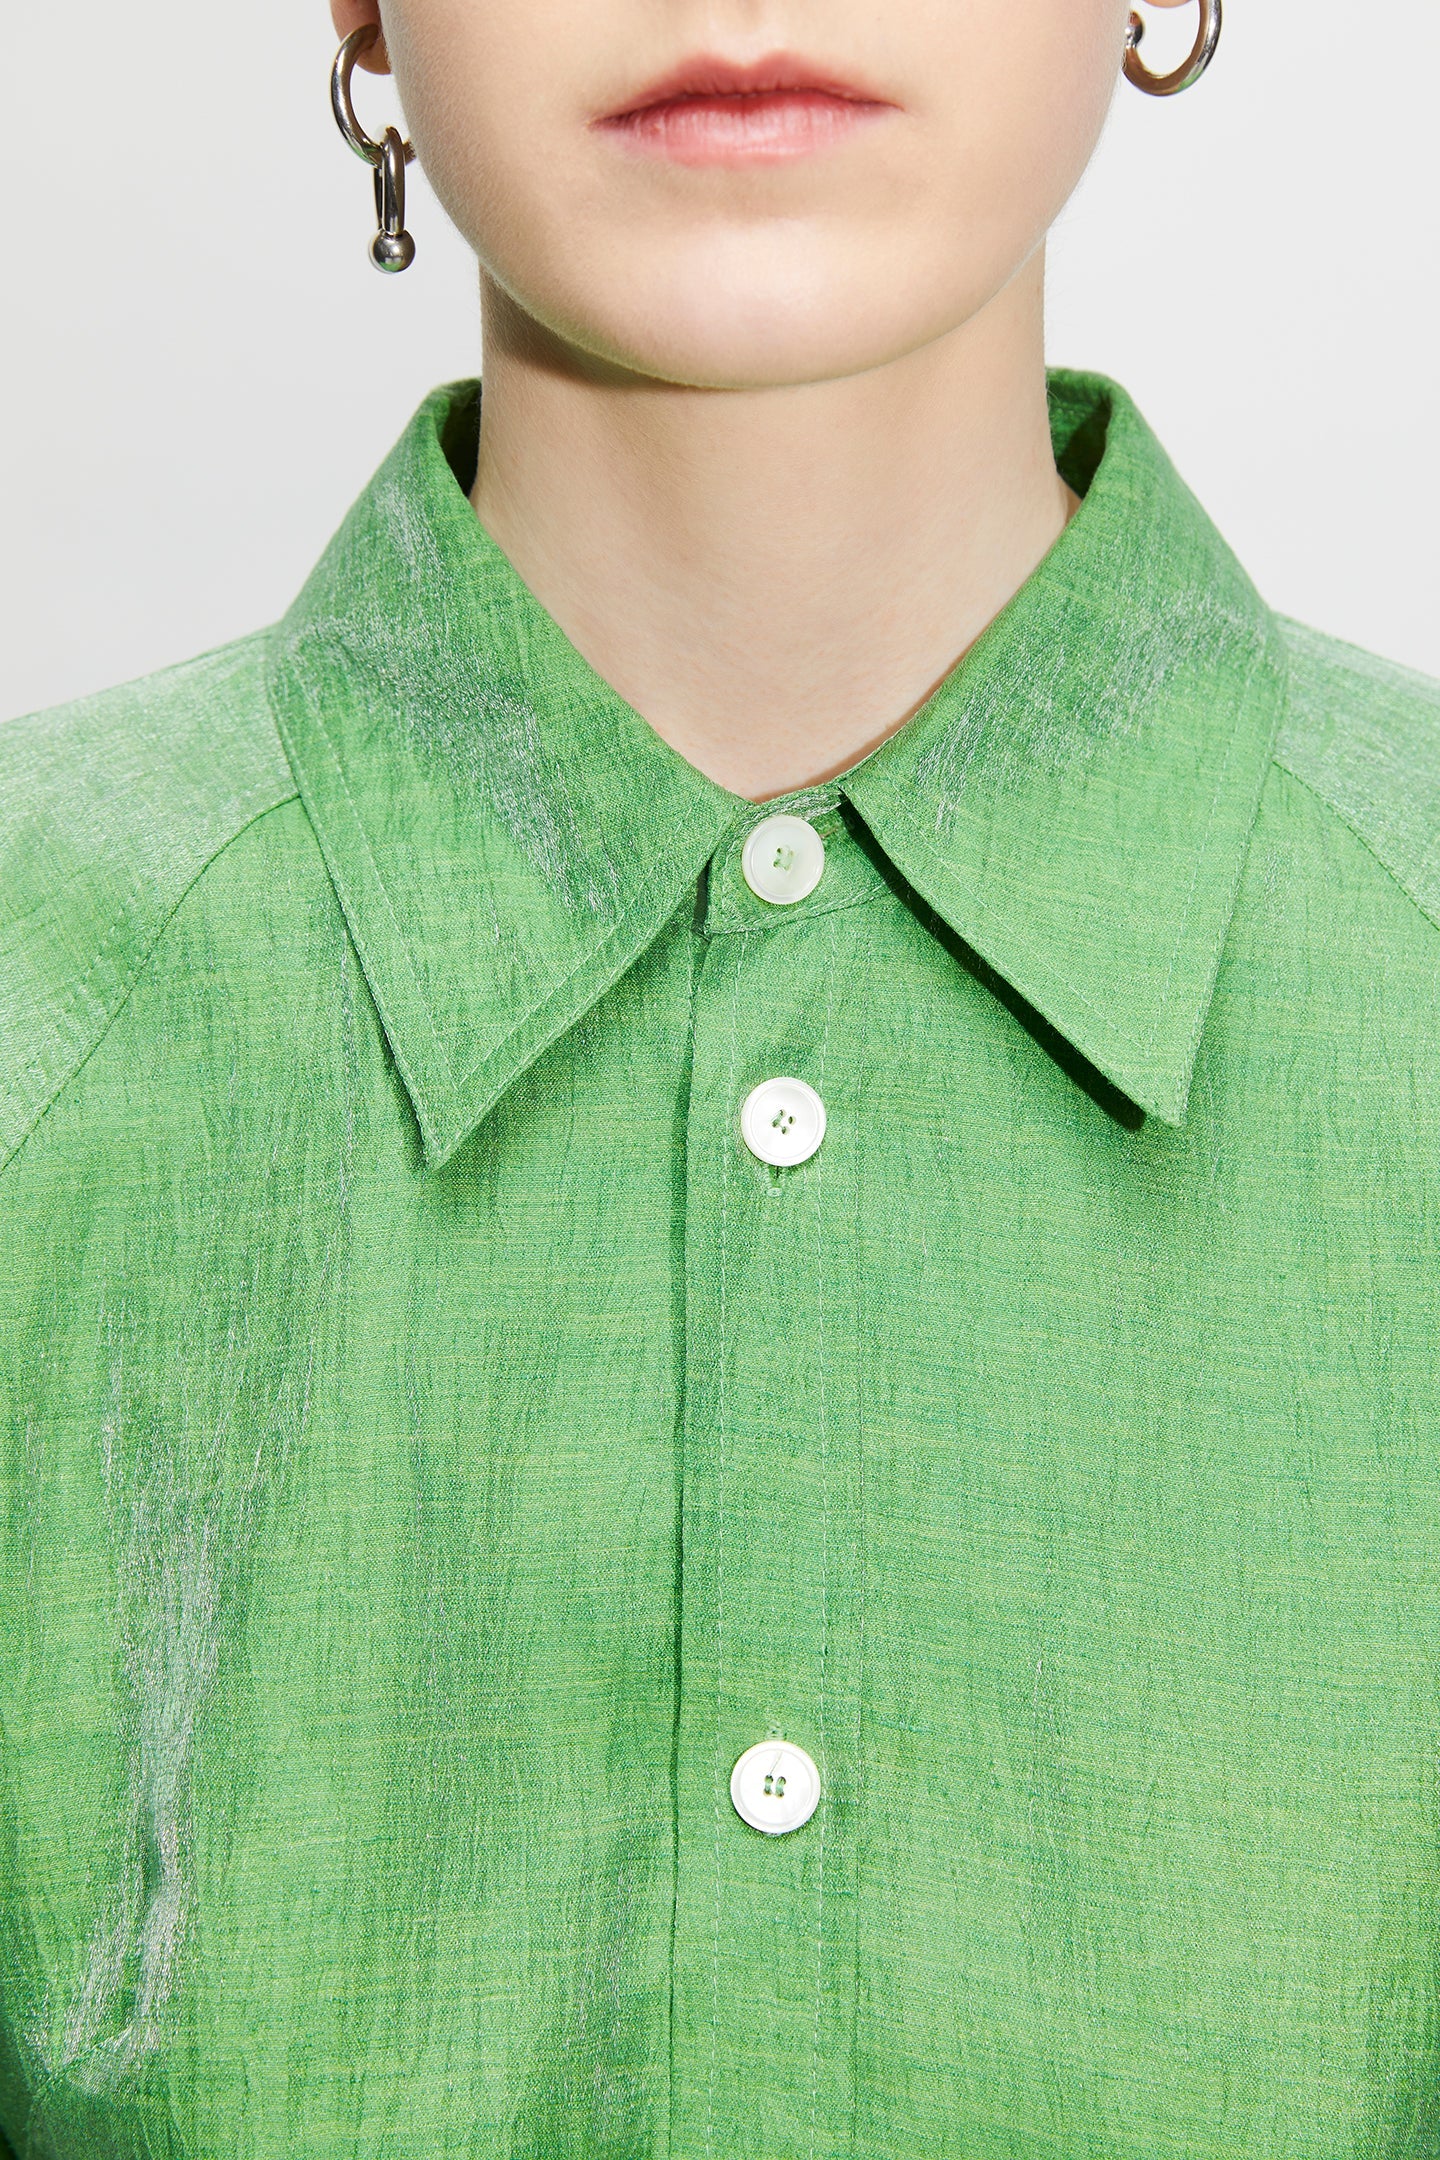 Matrix shirt bright green